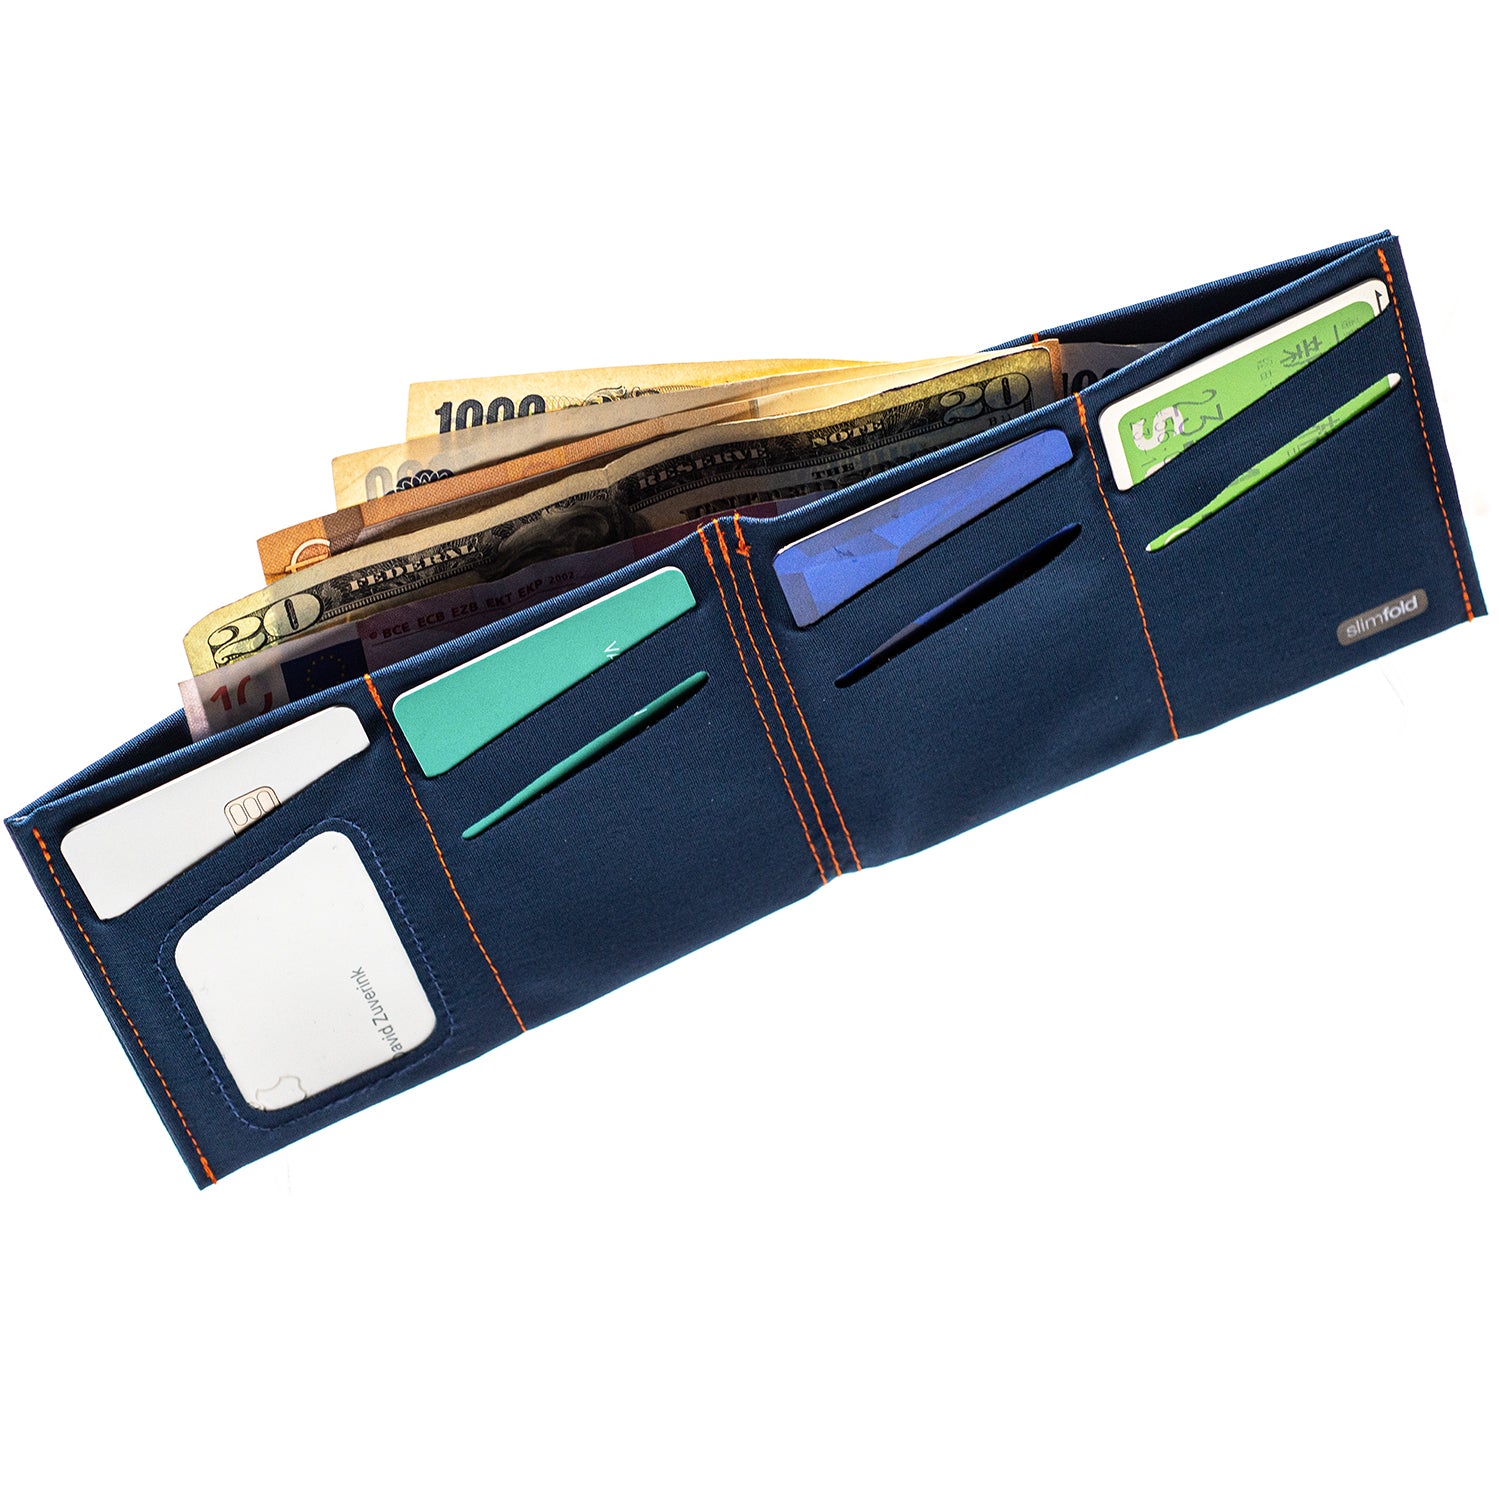 Square Business Card Holder, Super Tough Square Card Case